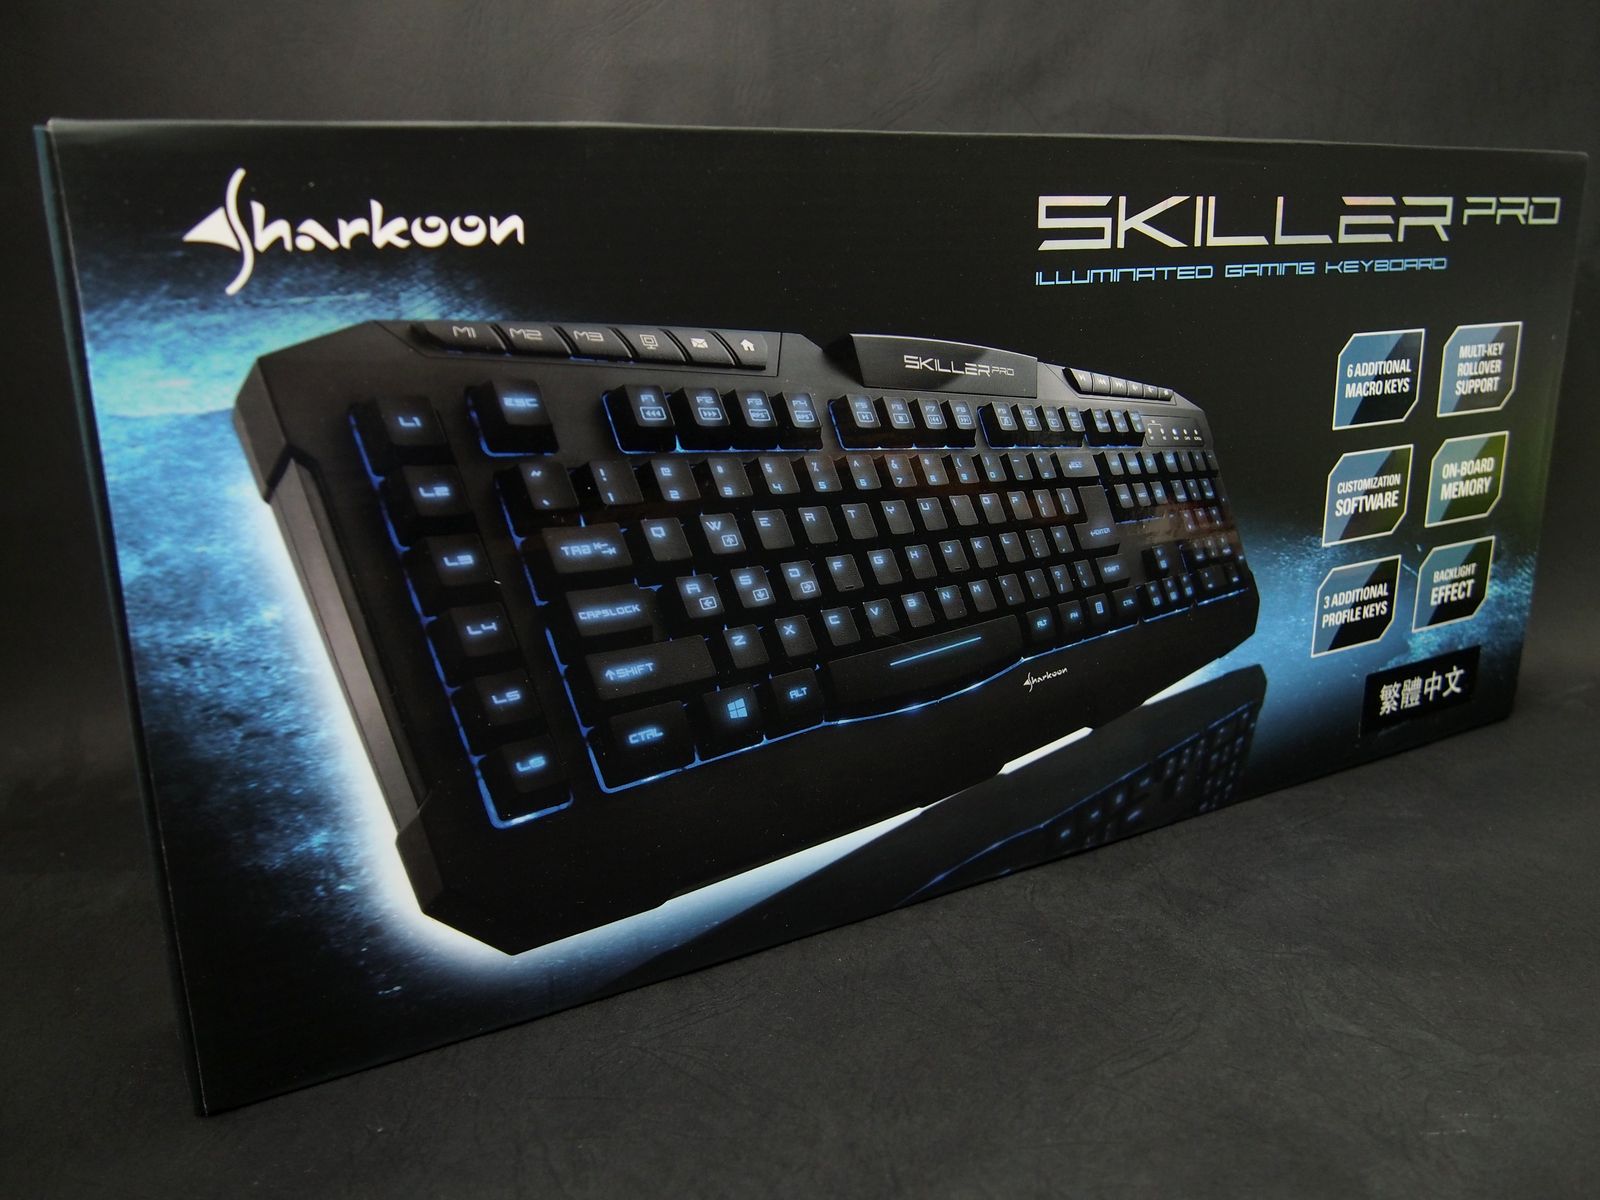 [XF] 夜行者進階款現身 Sharkoon 旋剛 SKILLER PRO 電競鍵盤